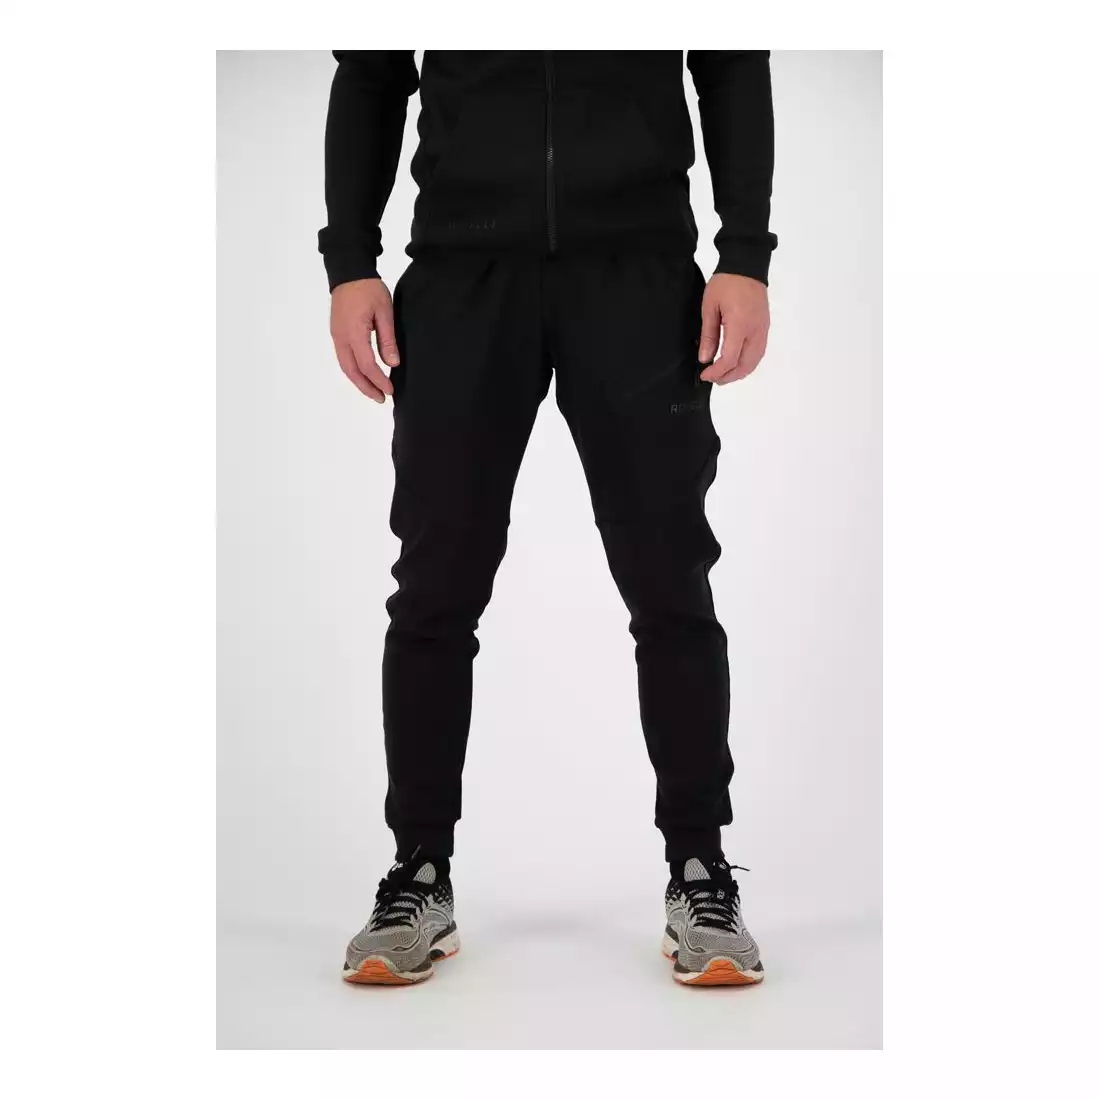 ROGELLI men's training trousers TRENING black | MikeSPORT